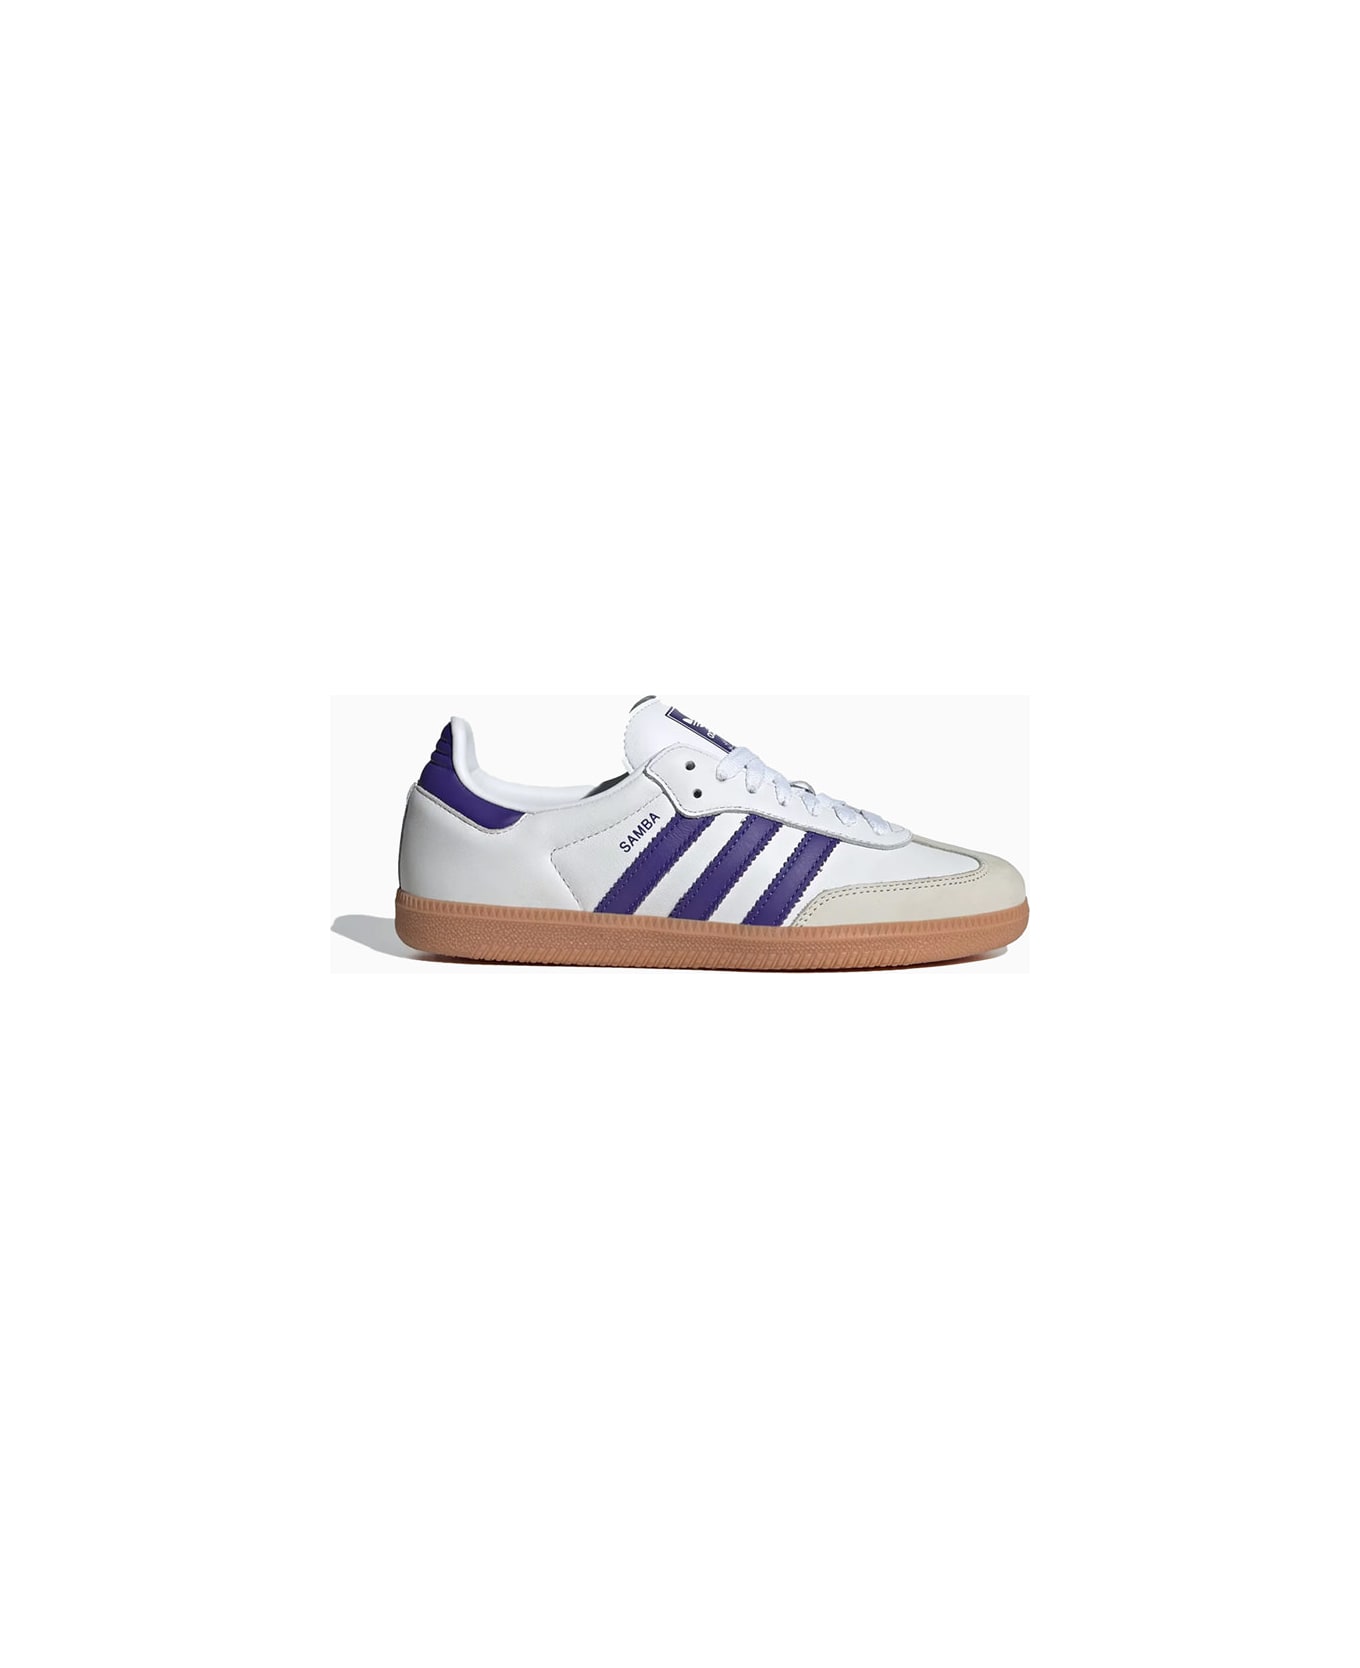 Adidas Samba Og White-purple Sneakers